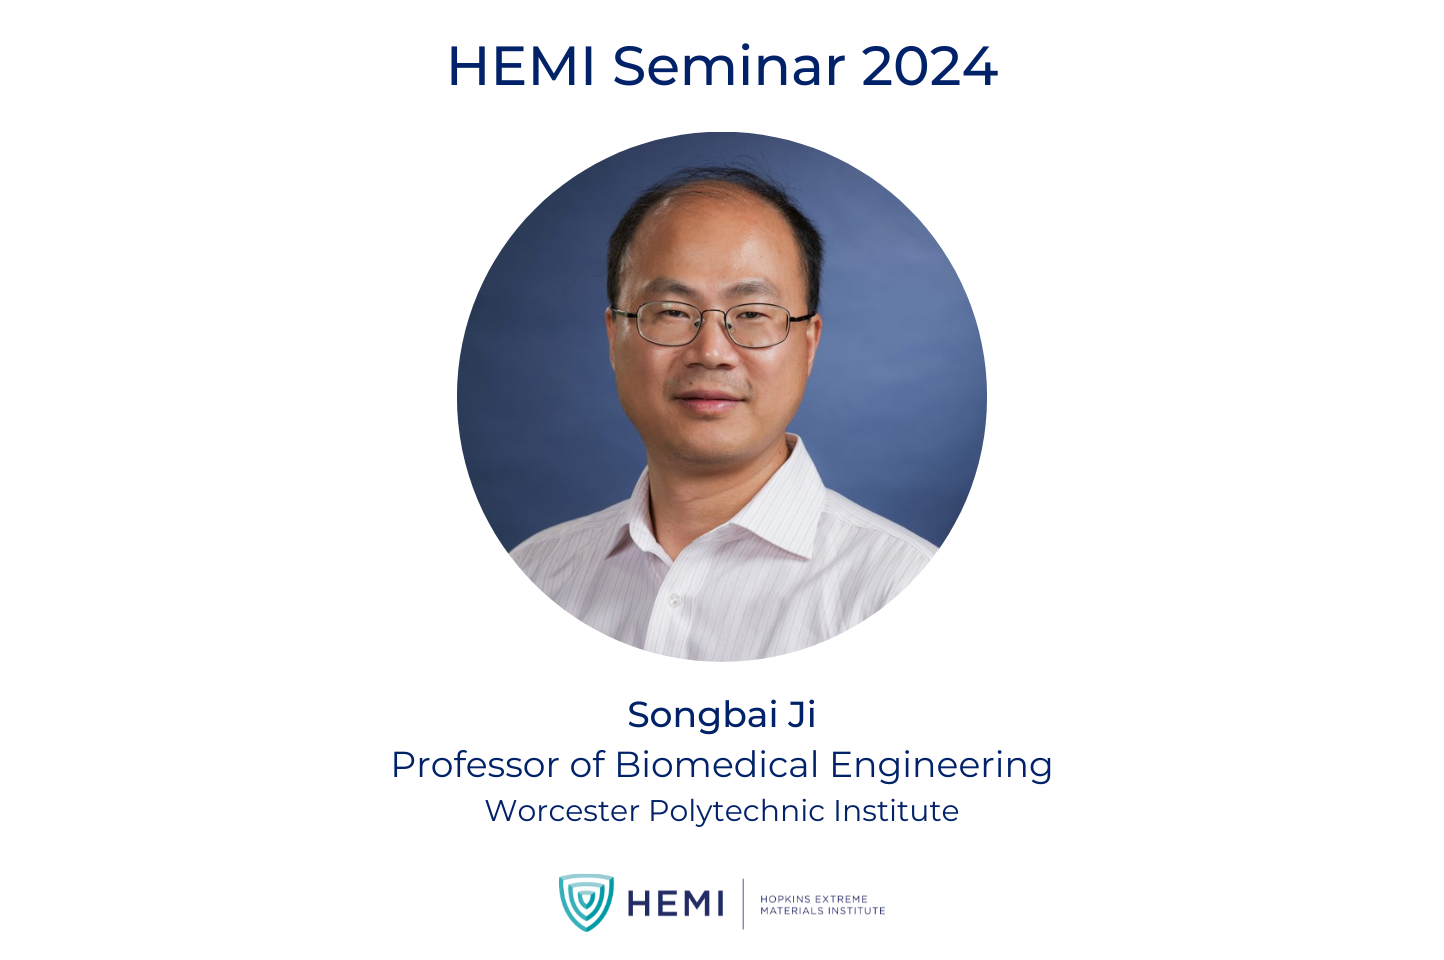 Headshot of Songbai Ji with HEMI logo and text: "HEMI Seminar 2024, Songbai Ji, Professor of Biomedical Engineering, Worcester Polytechnic Institute"